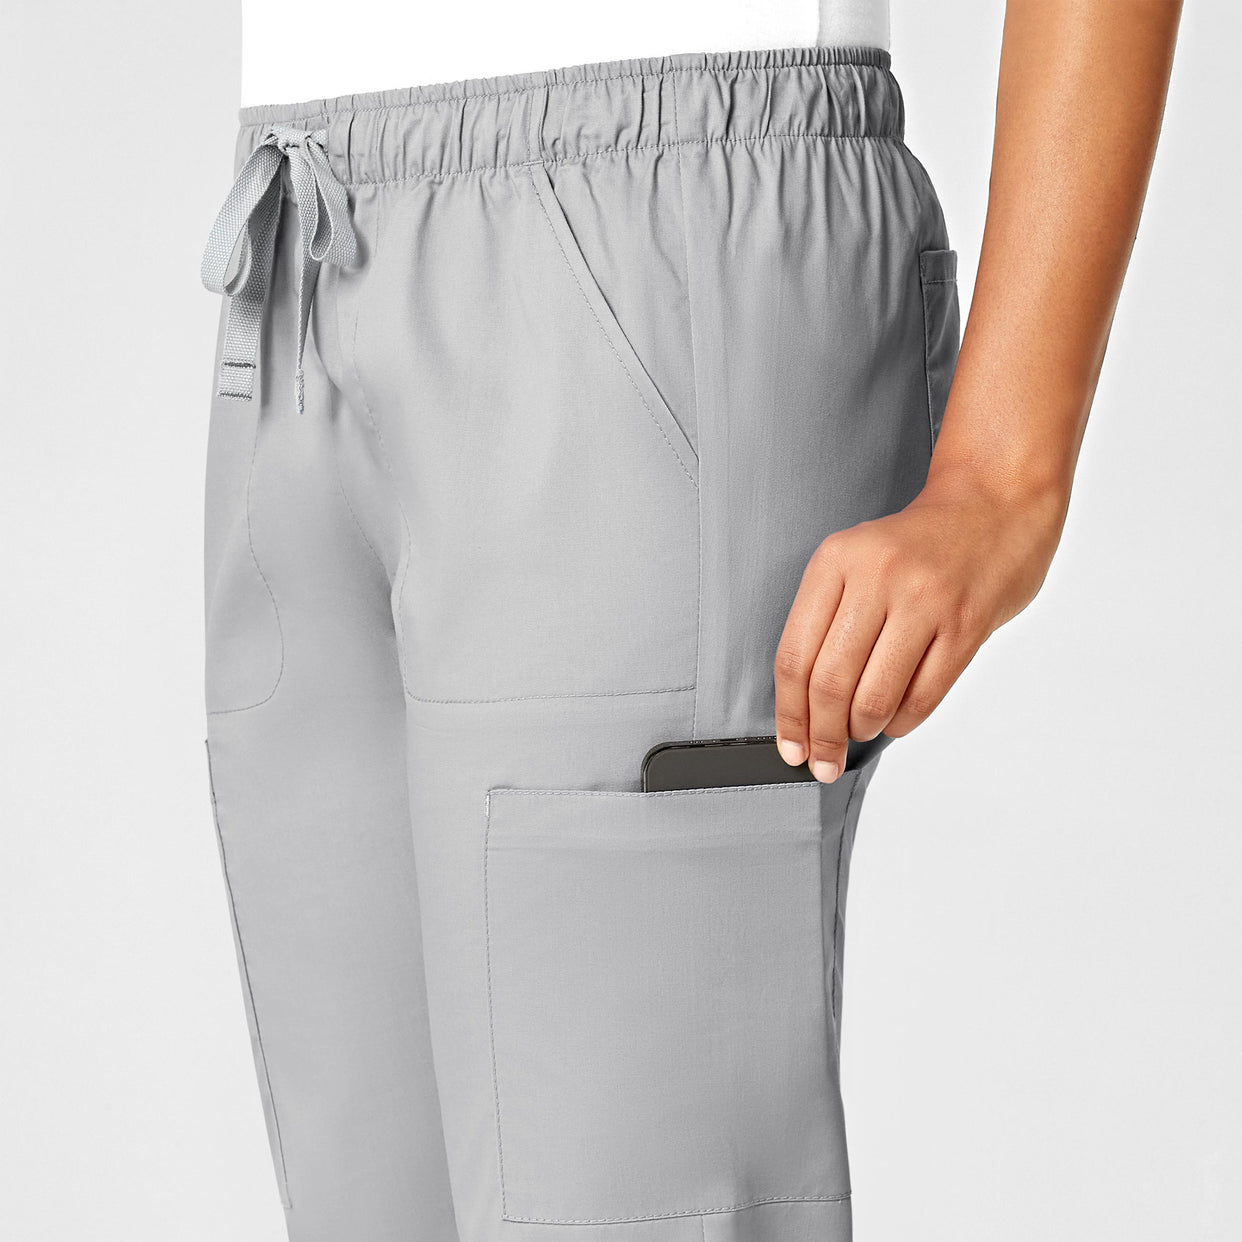 WonderWORK Women's Convertible Slim Leg Scrub Pant - Grey